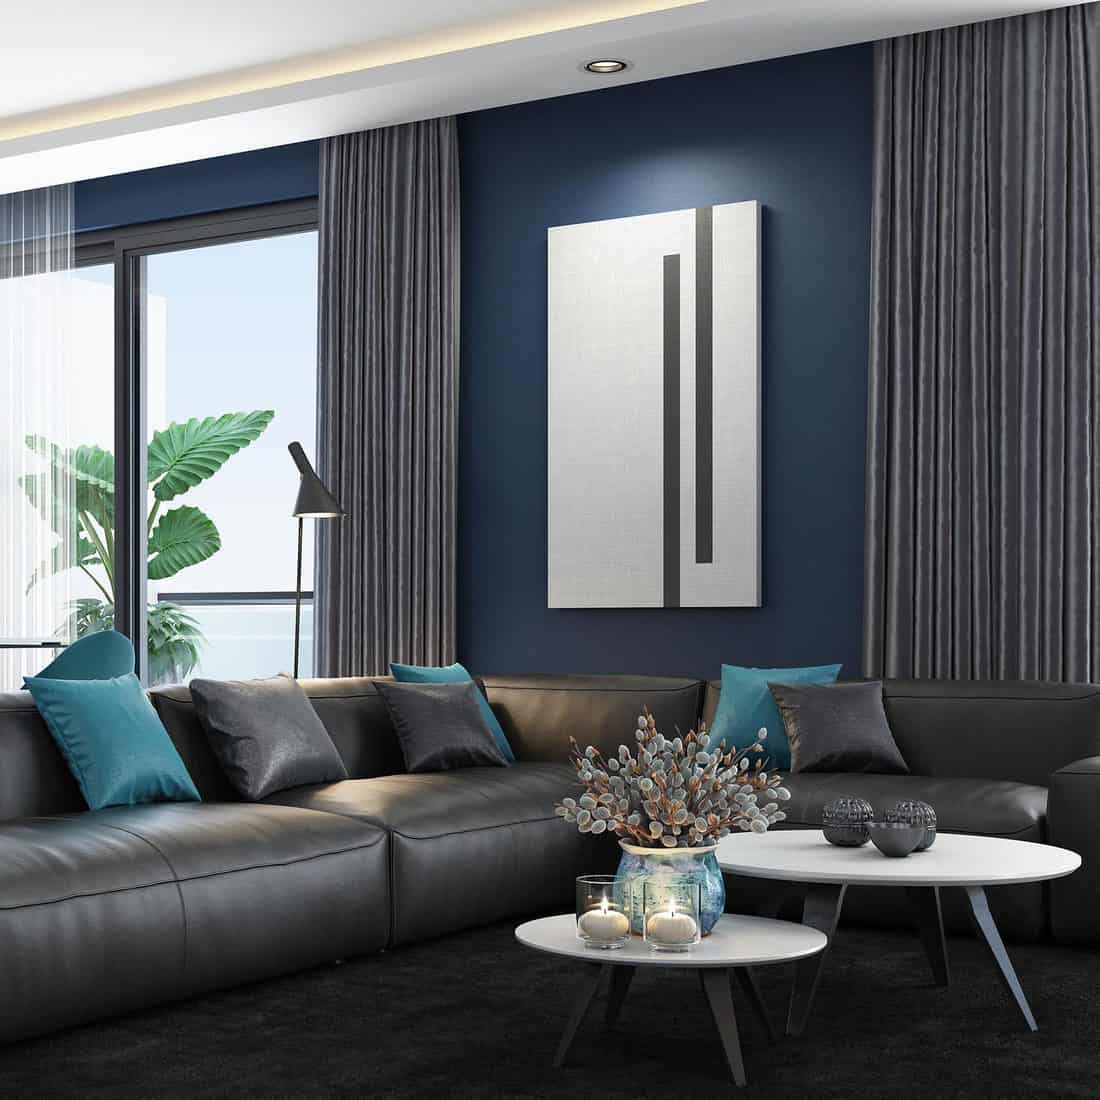 Luxury apartment with living room interior with black corner sofa